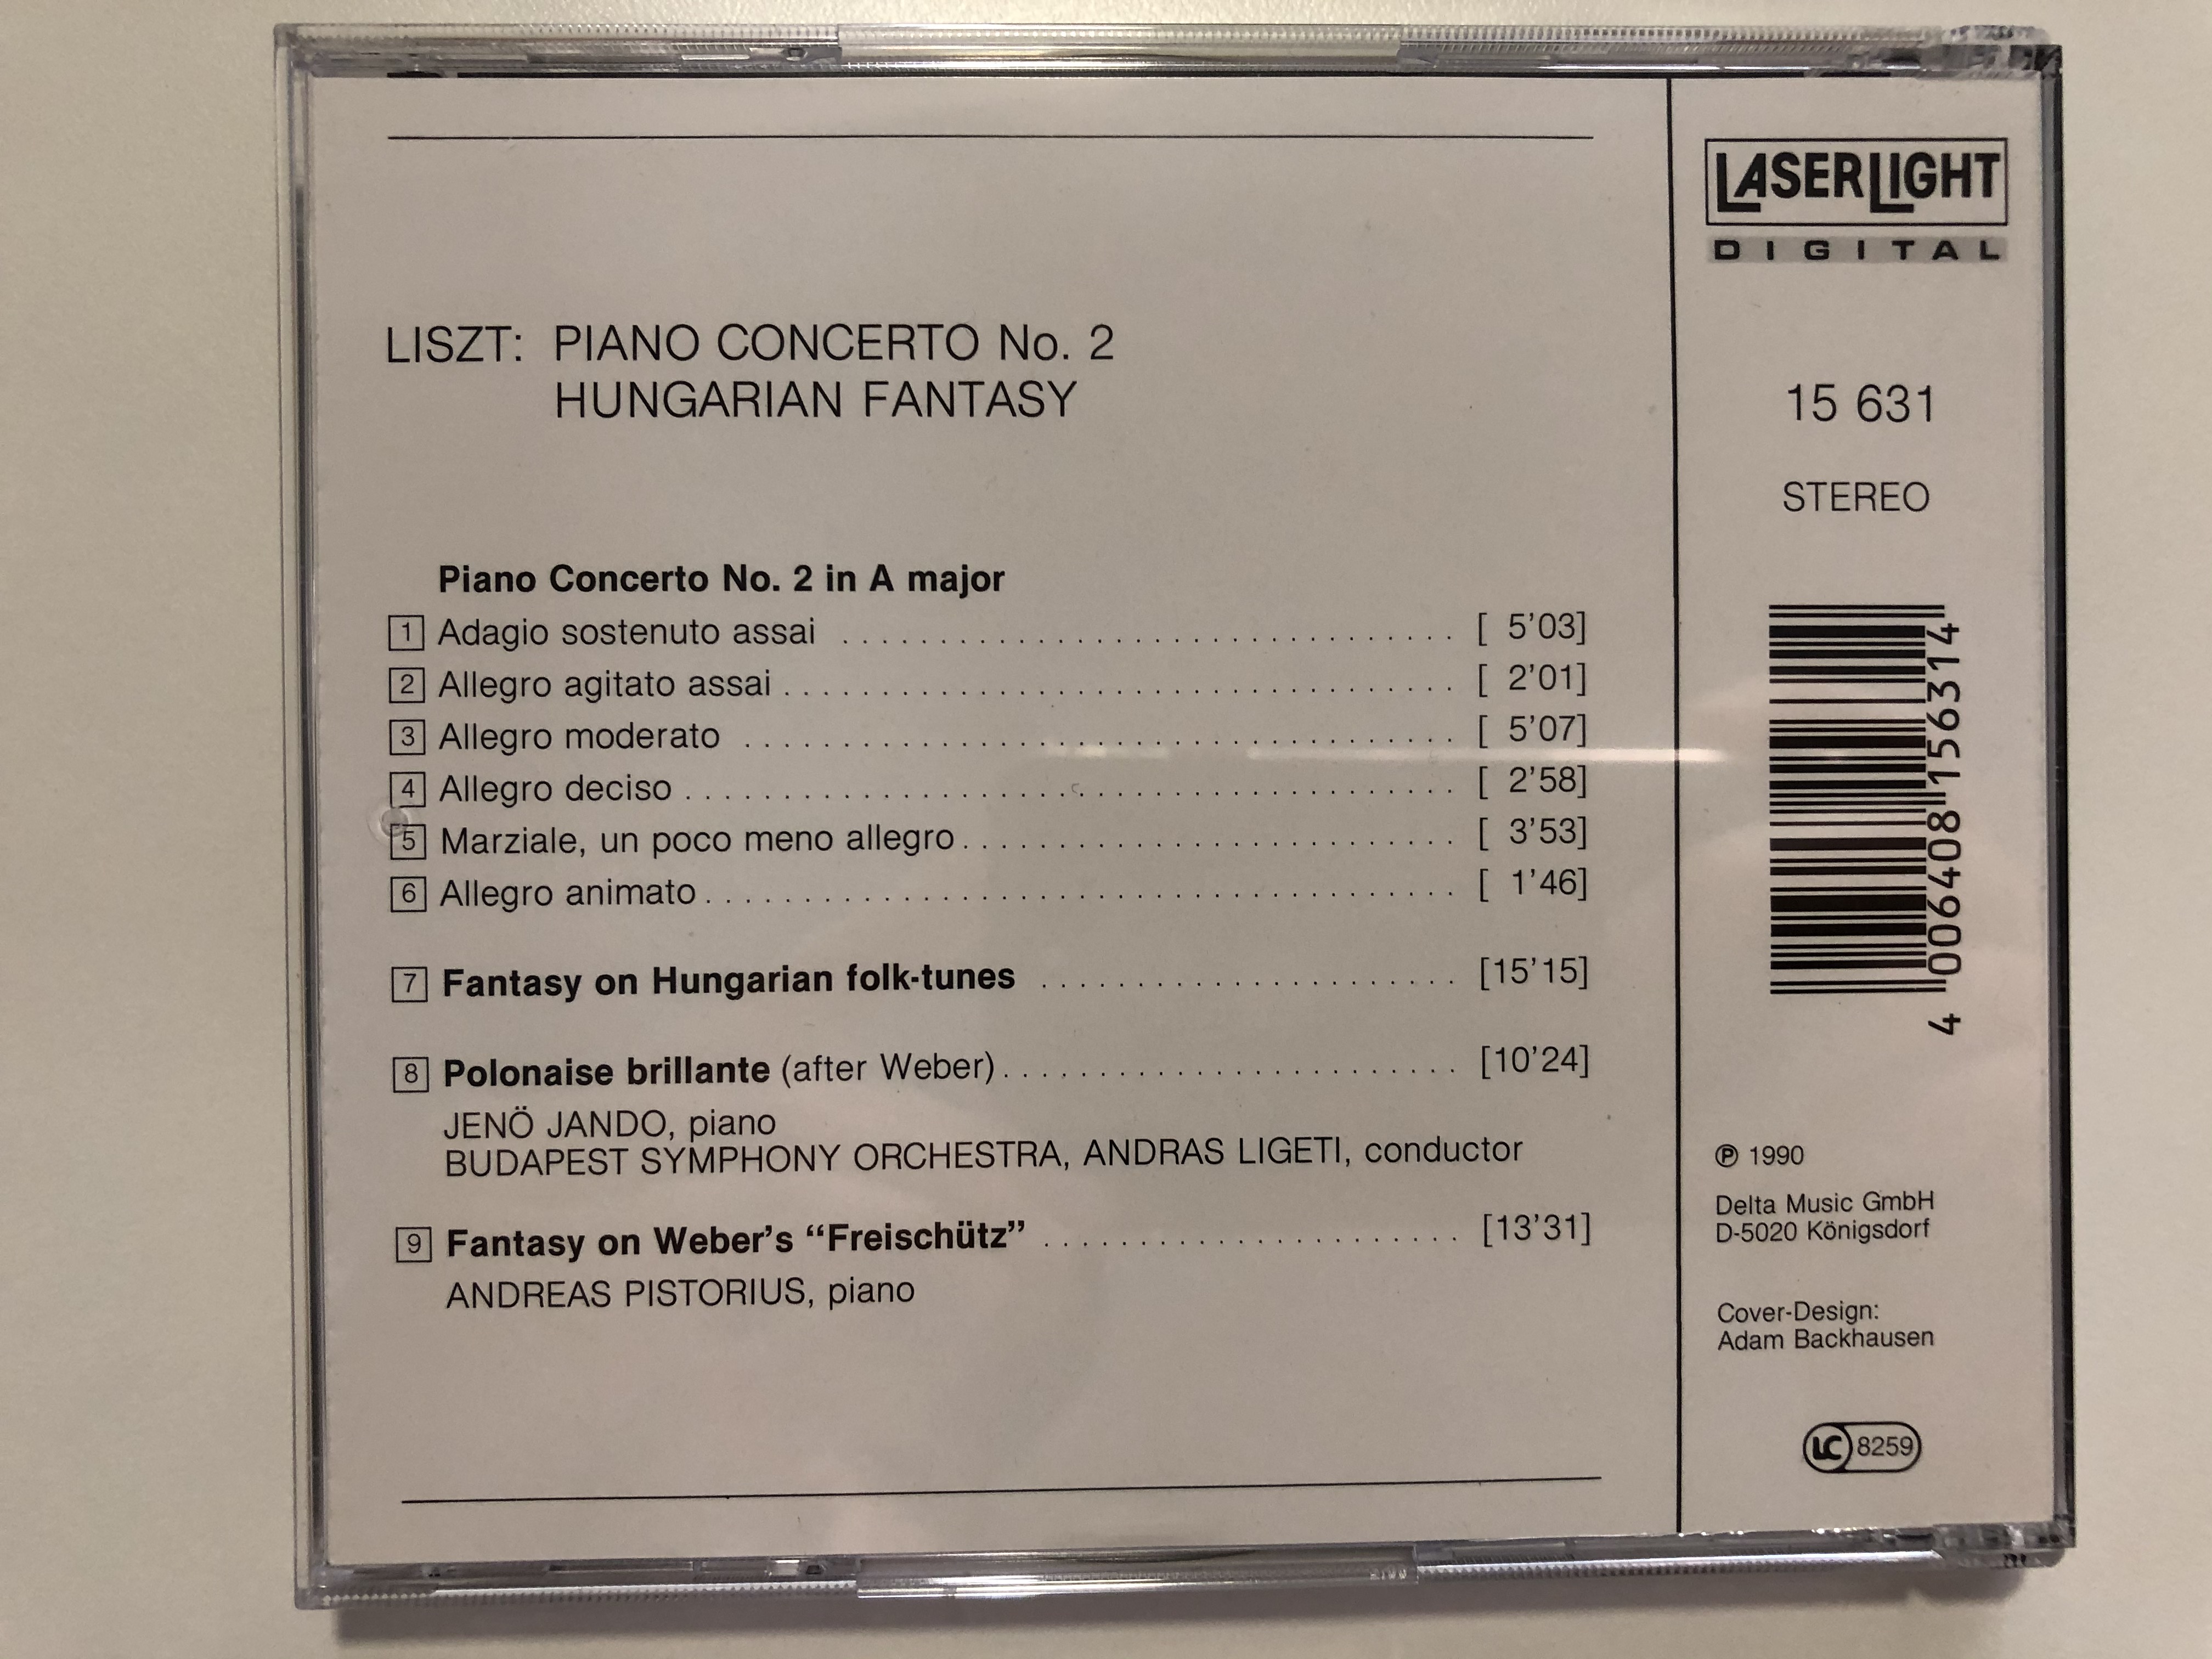 les-fleurs-liszt-piano-concert-no.-2-hungarian-fantasy-polonaise-brilliante-freischutz-fantasy-jen-jand-piano-budapest-symphony-orchestra-andras-ligeti-conductor-laserli-5-.jpg